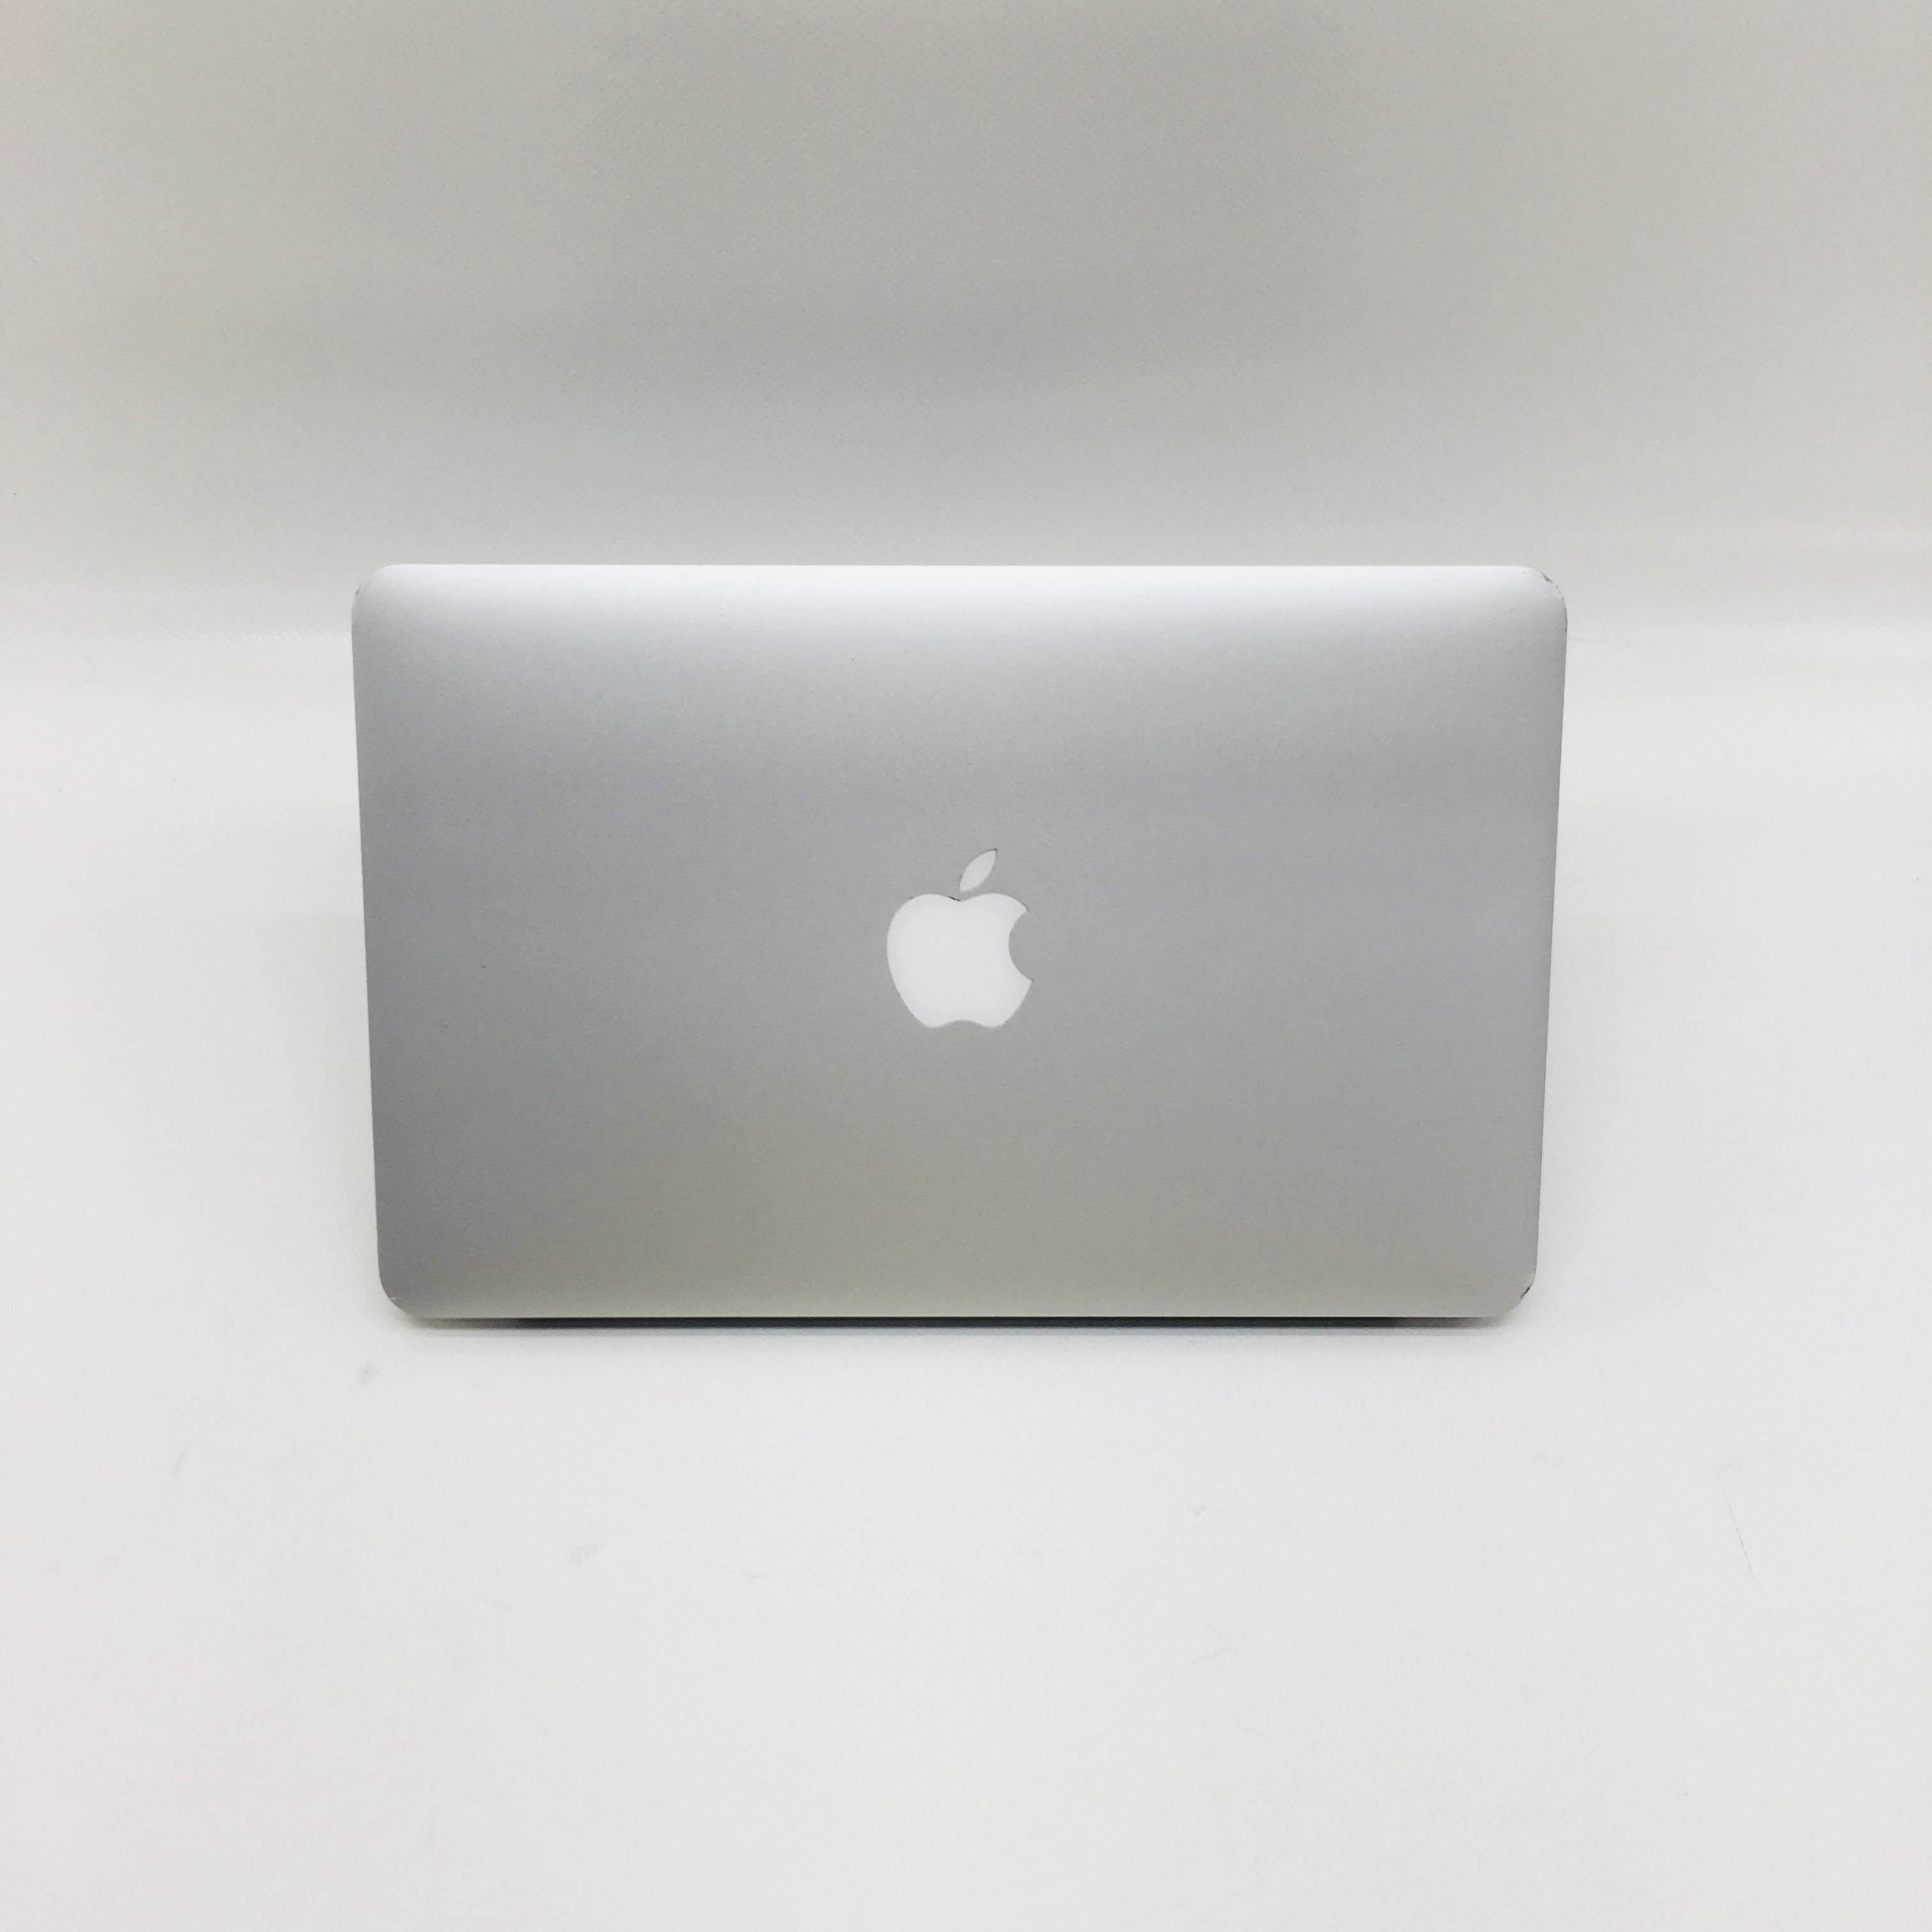 MacBook Air 11" Early 2015 (Intel Core i5 1.6 GHz 4 GB RAM 128 GB SSD), Intel Core i5 1.6 GHz, 4 GB RAM, 128 GB SSD, image 4